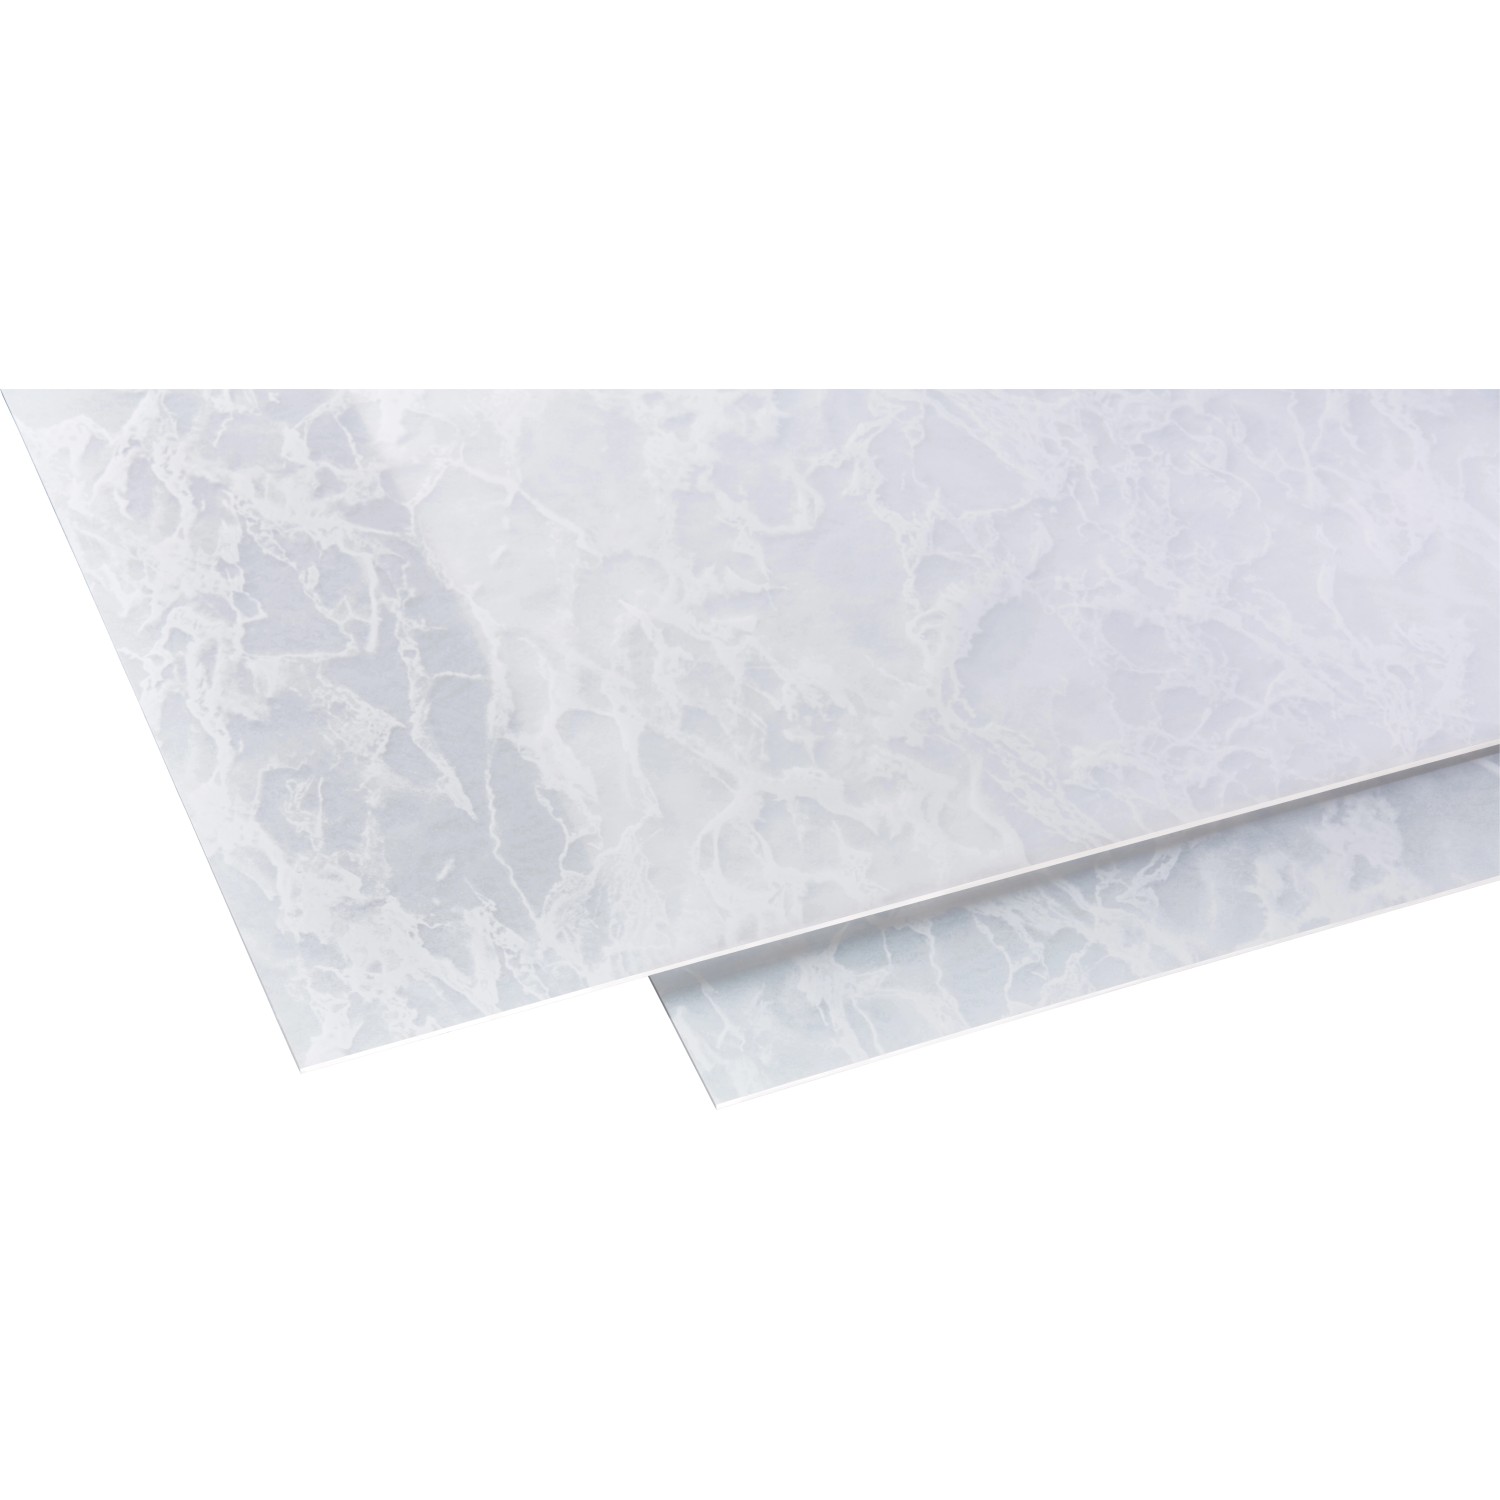 Polystyrol-Platte 2,5 mm Marmor weiß 1000 mm x 1000 mm kaufen bei OBI